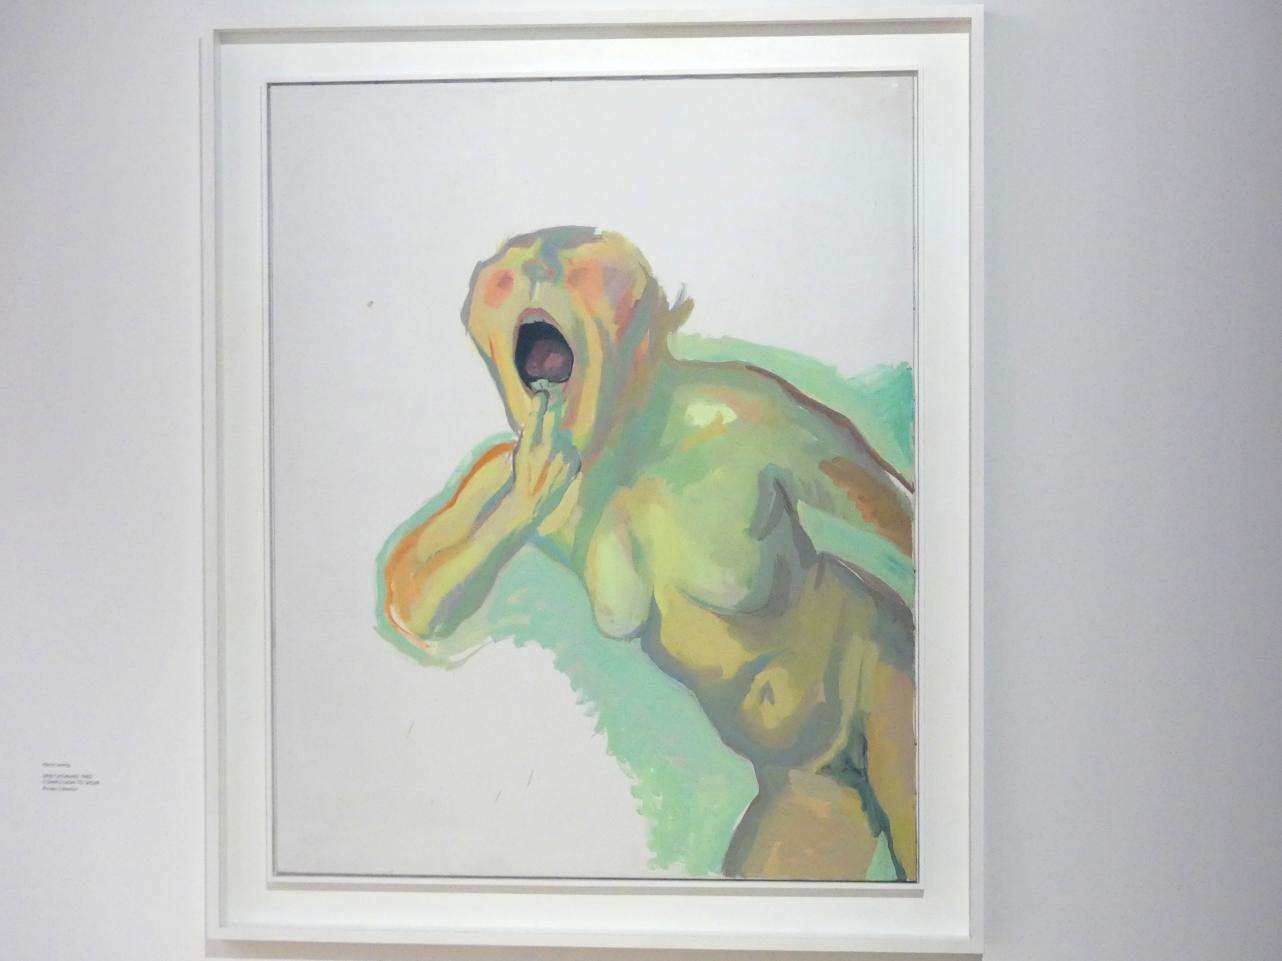 Maria Lassnig (1945–2011), Sprechzwang, München, Lenbachhaus, Kunstbau, Ausstellung "BODY CHECK" vom 21.05.-15.09.2019, 1980